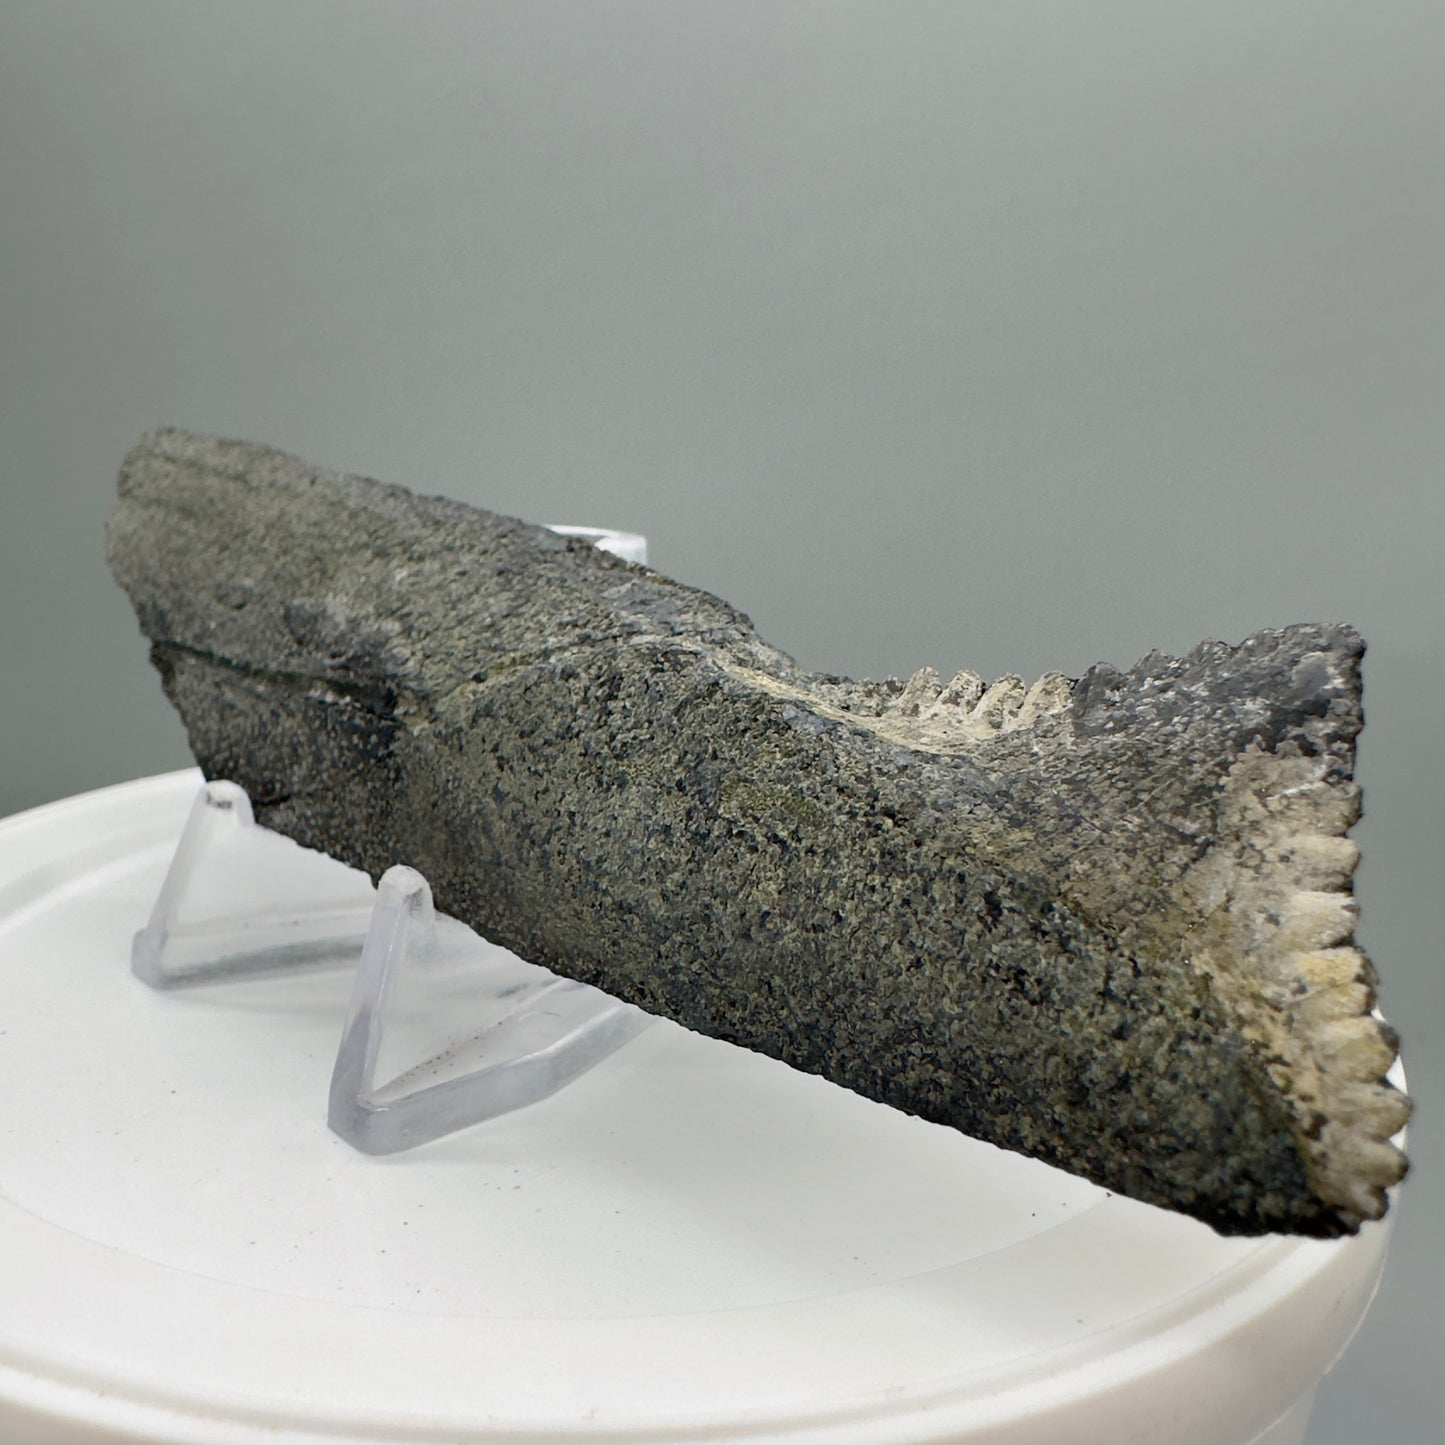 5.38" Fossil Extinct Eugeneodont - Edestus heinrichi shark Jaw, from Southern Illinois - Rare Specimen, 300 million years old